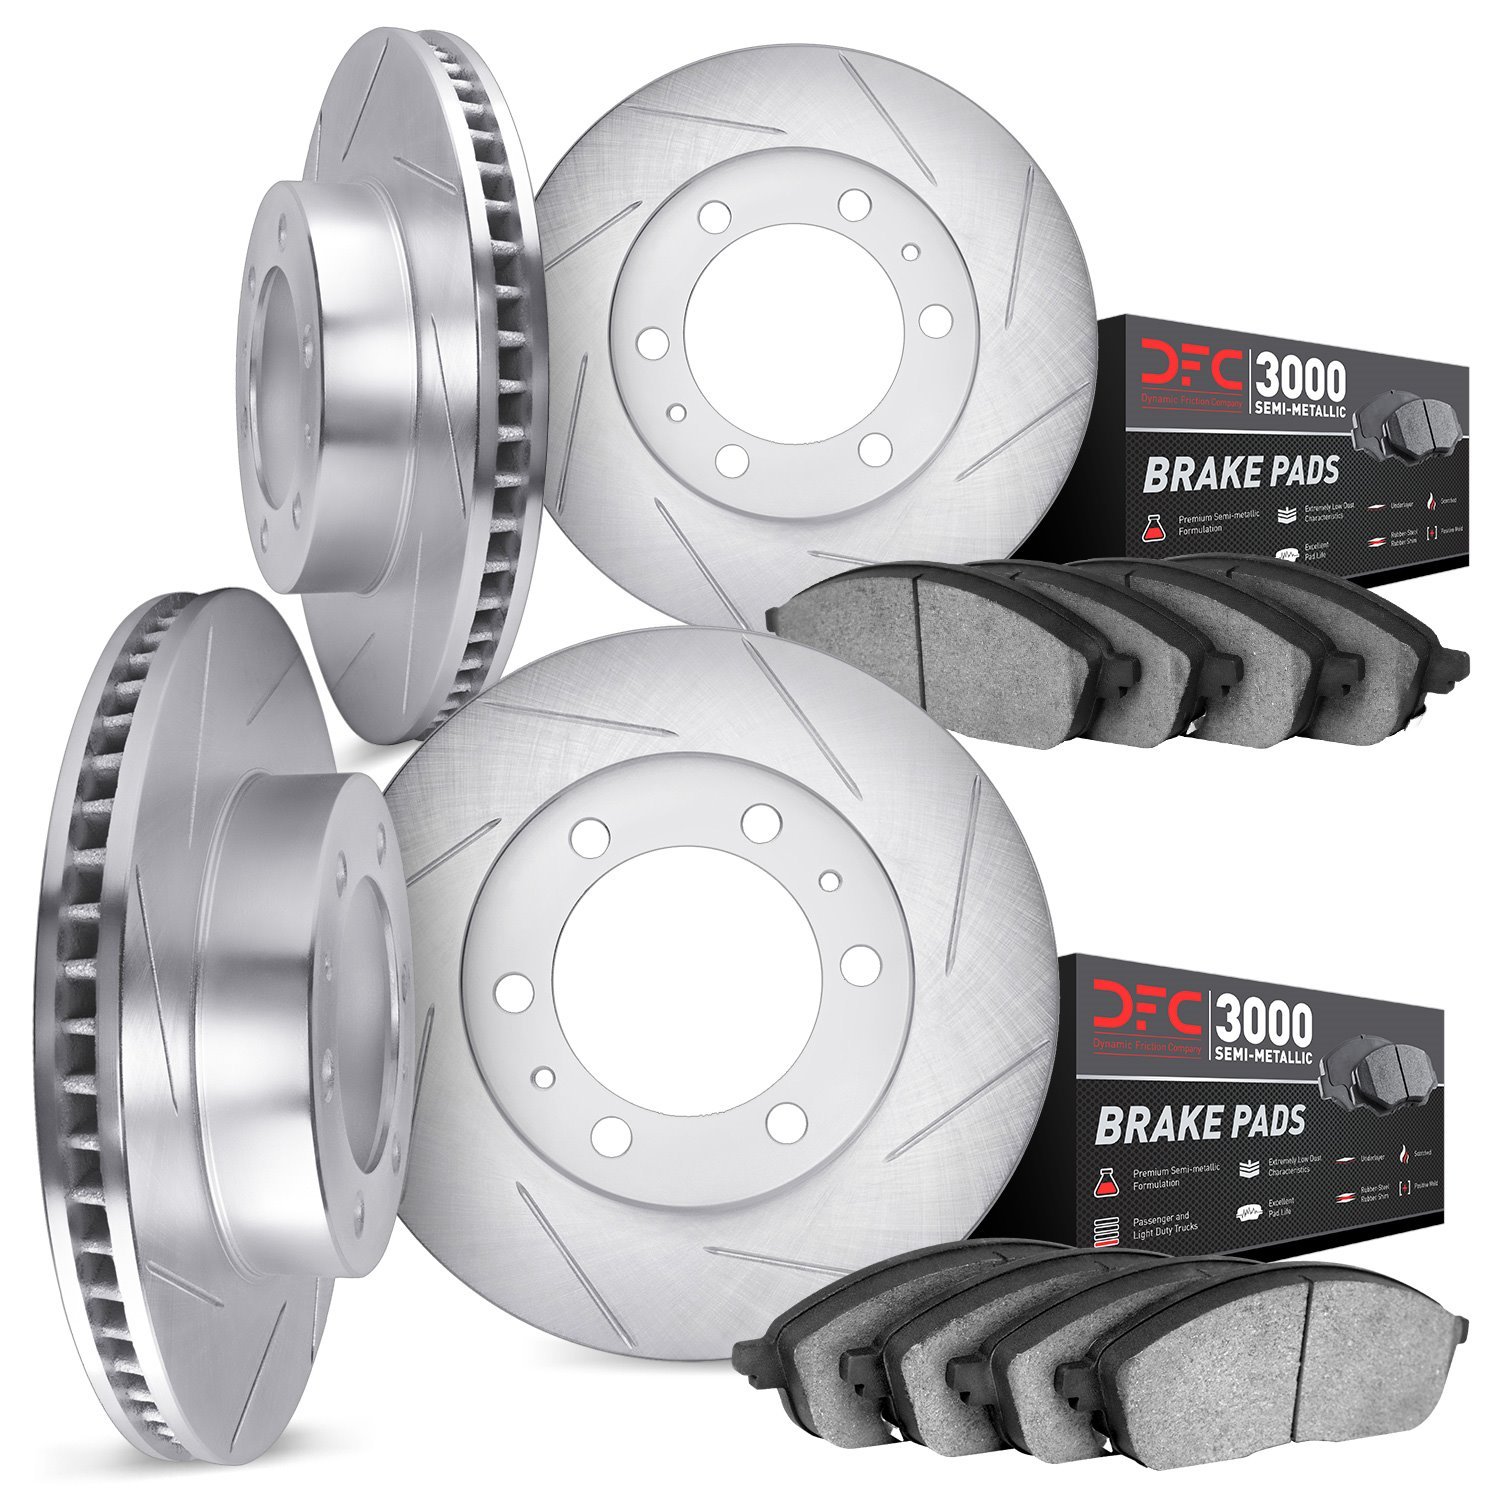 5114-48032 Slotted Brake Rotors with 3000-Series Semi-Metallic Brake Pads Kit & Hardware [Silver], 2014-2020 GM, Position: Front